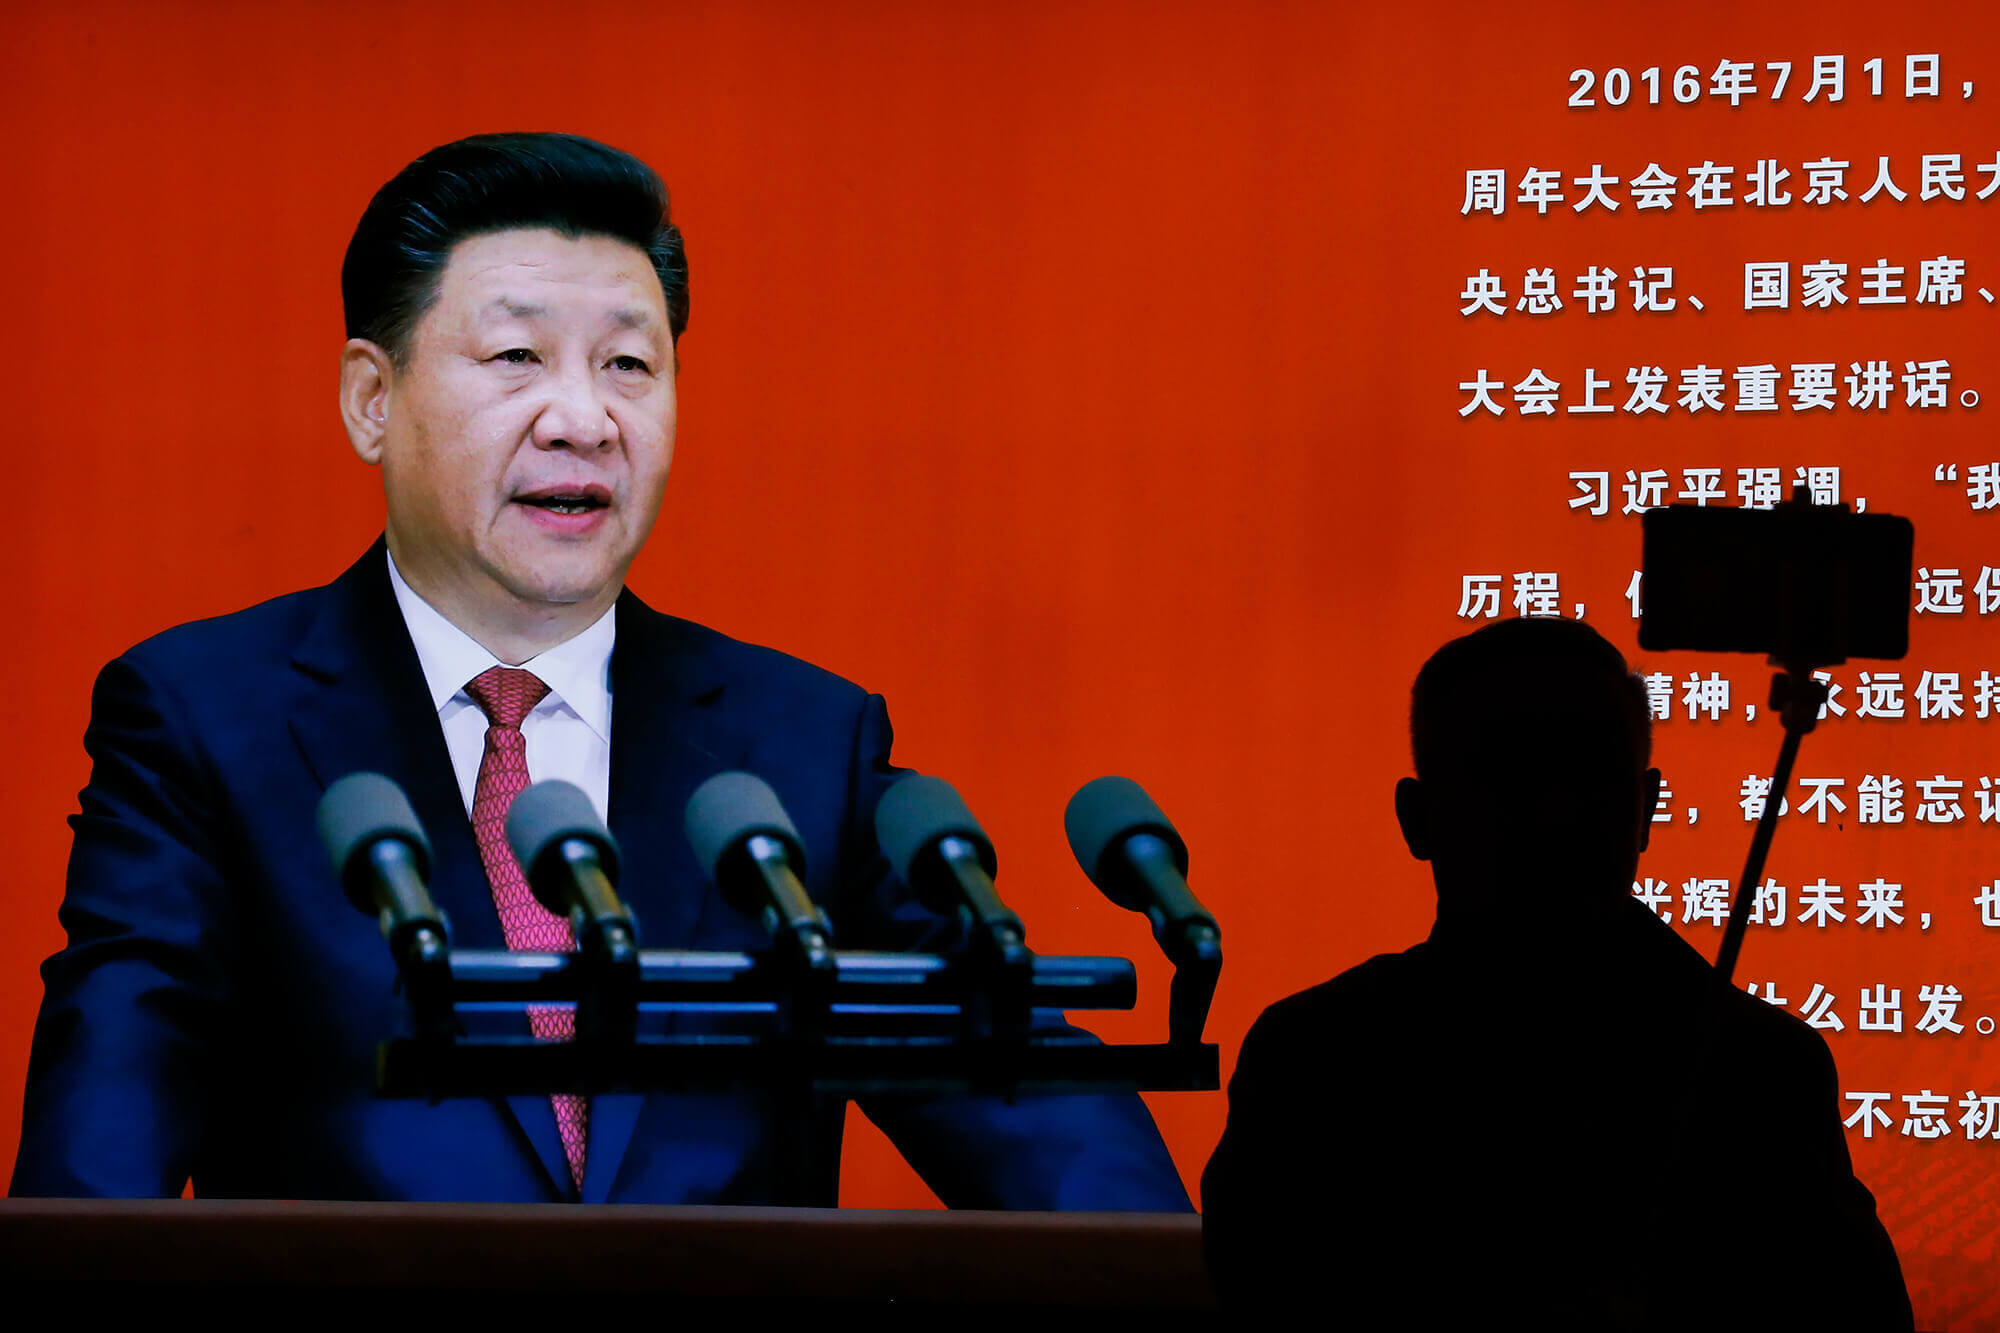 Image of President Xi Jinping